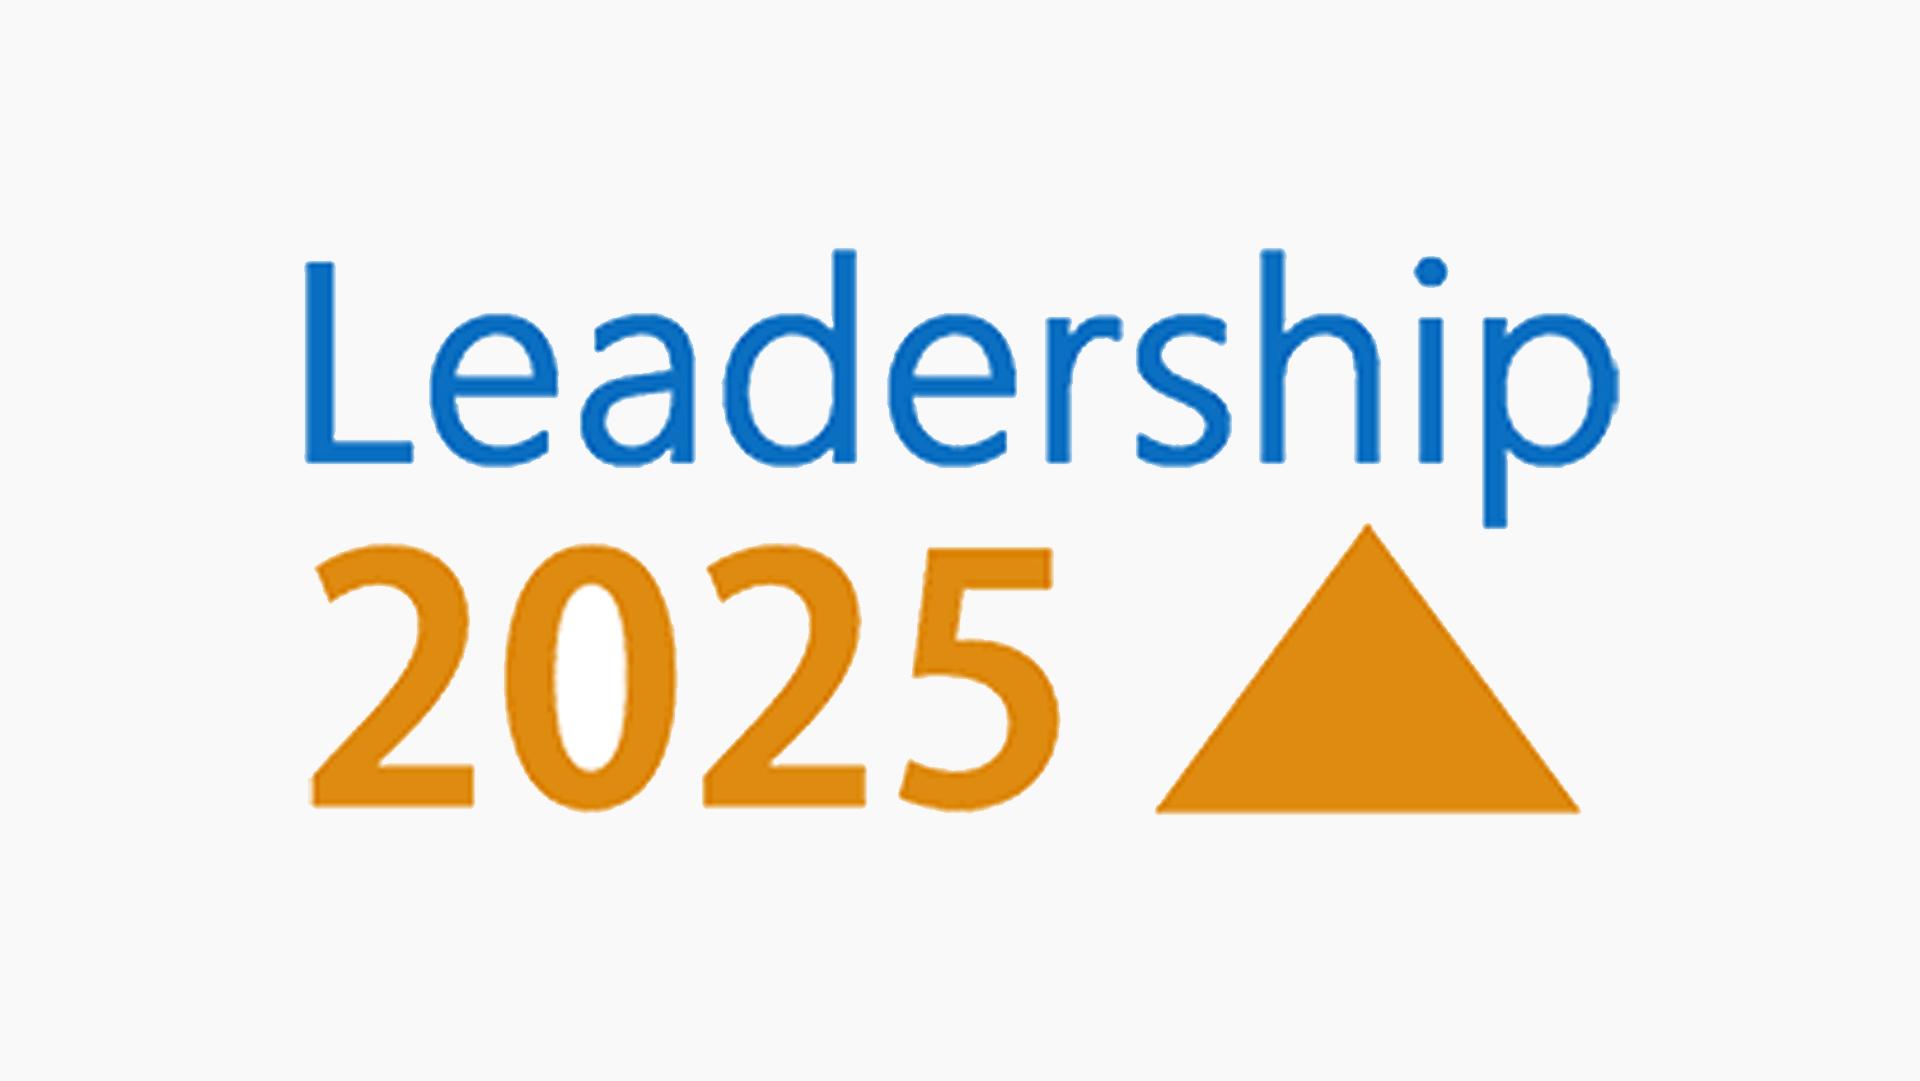 Leadership 2025